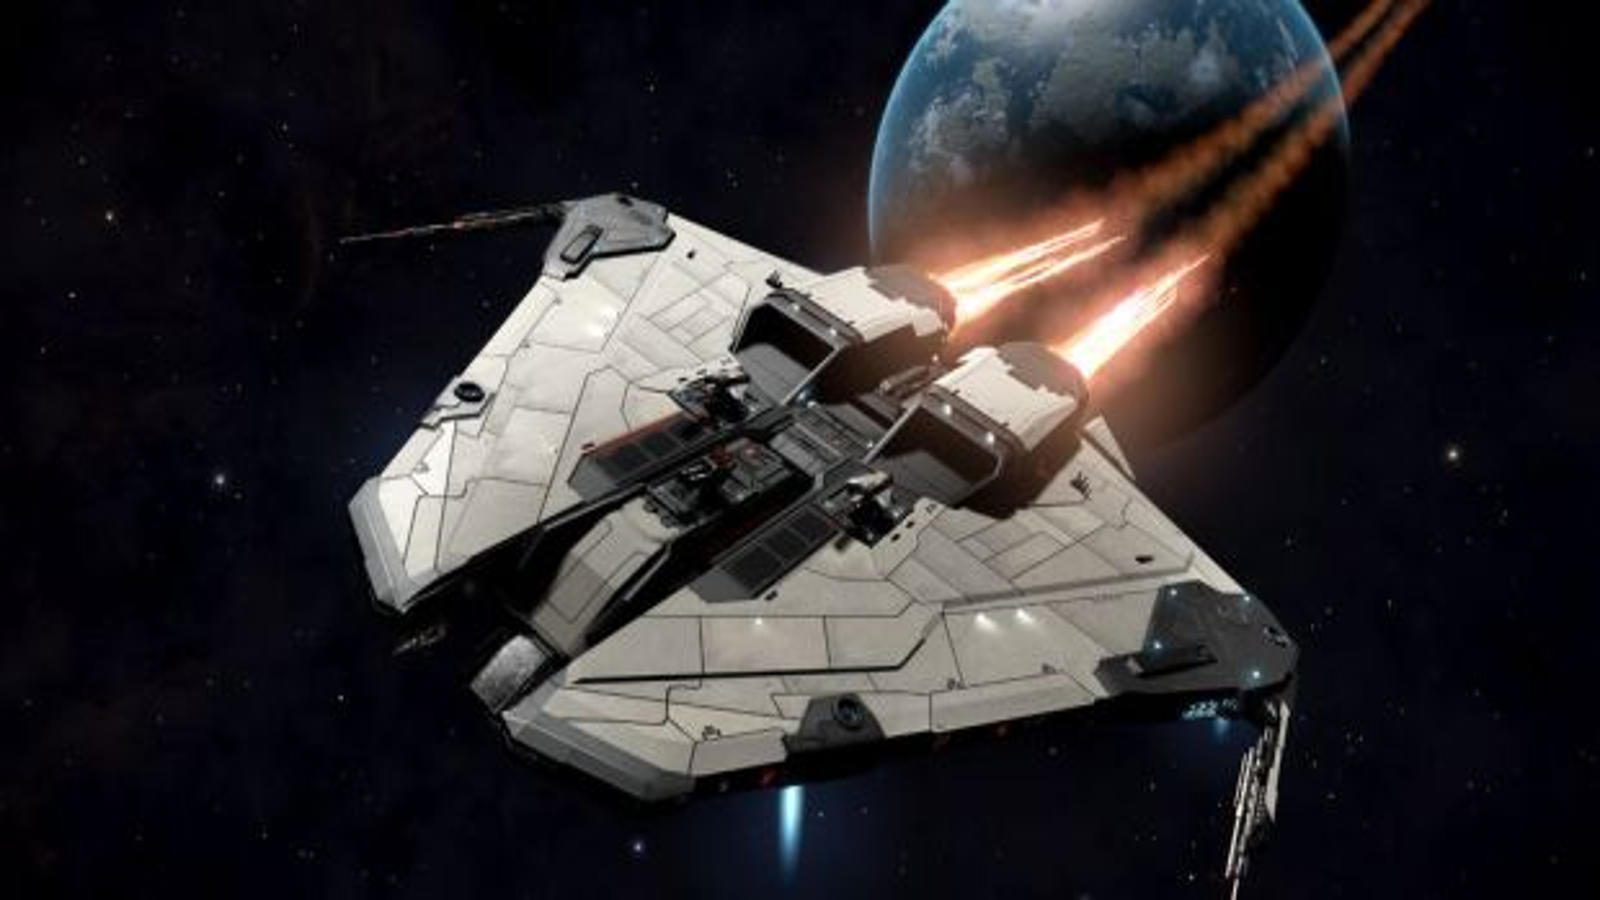 Elite 4: Dangerous - Space Ships